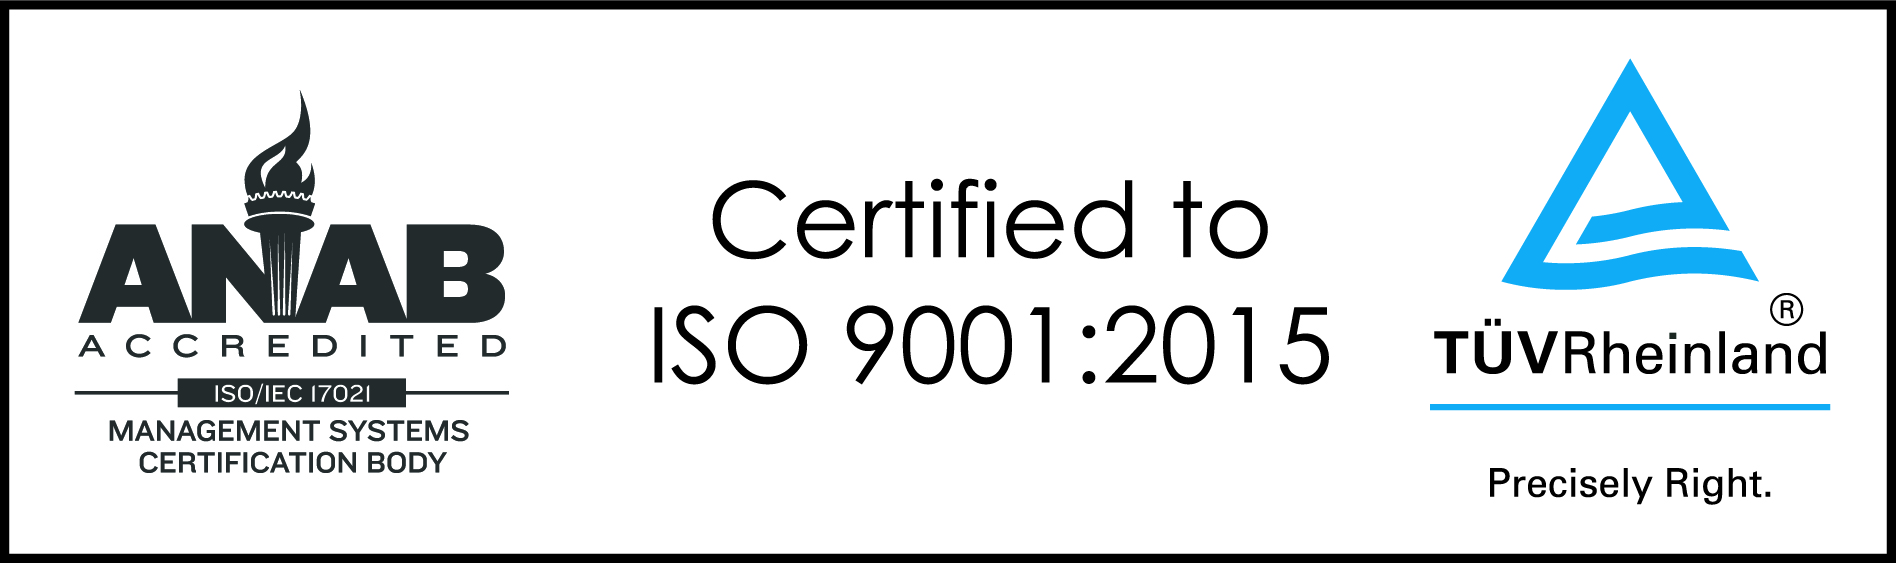 03_ISO 9001-2015_horizontal-BW-Color (002).jpg